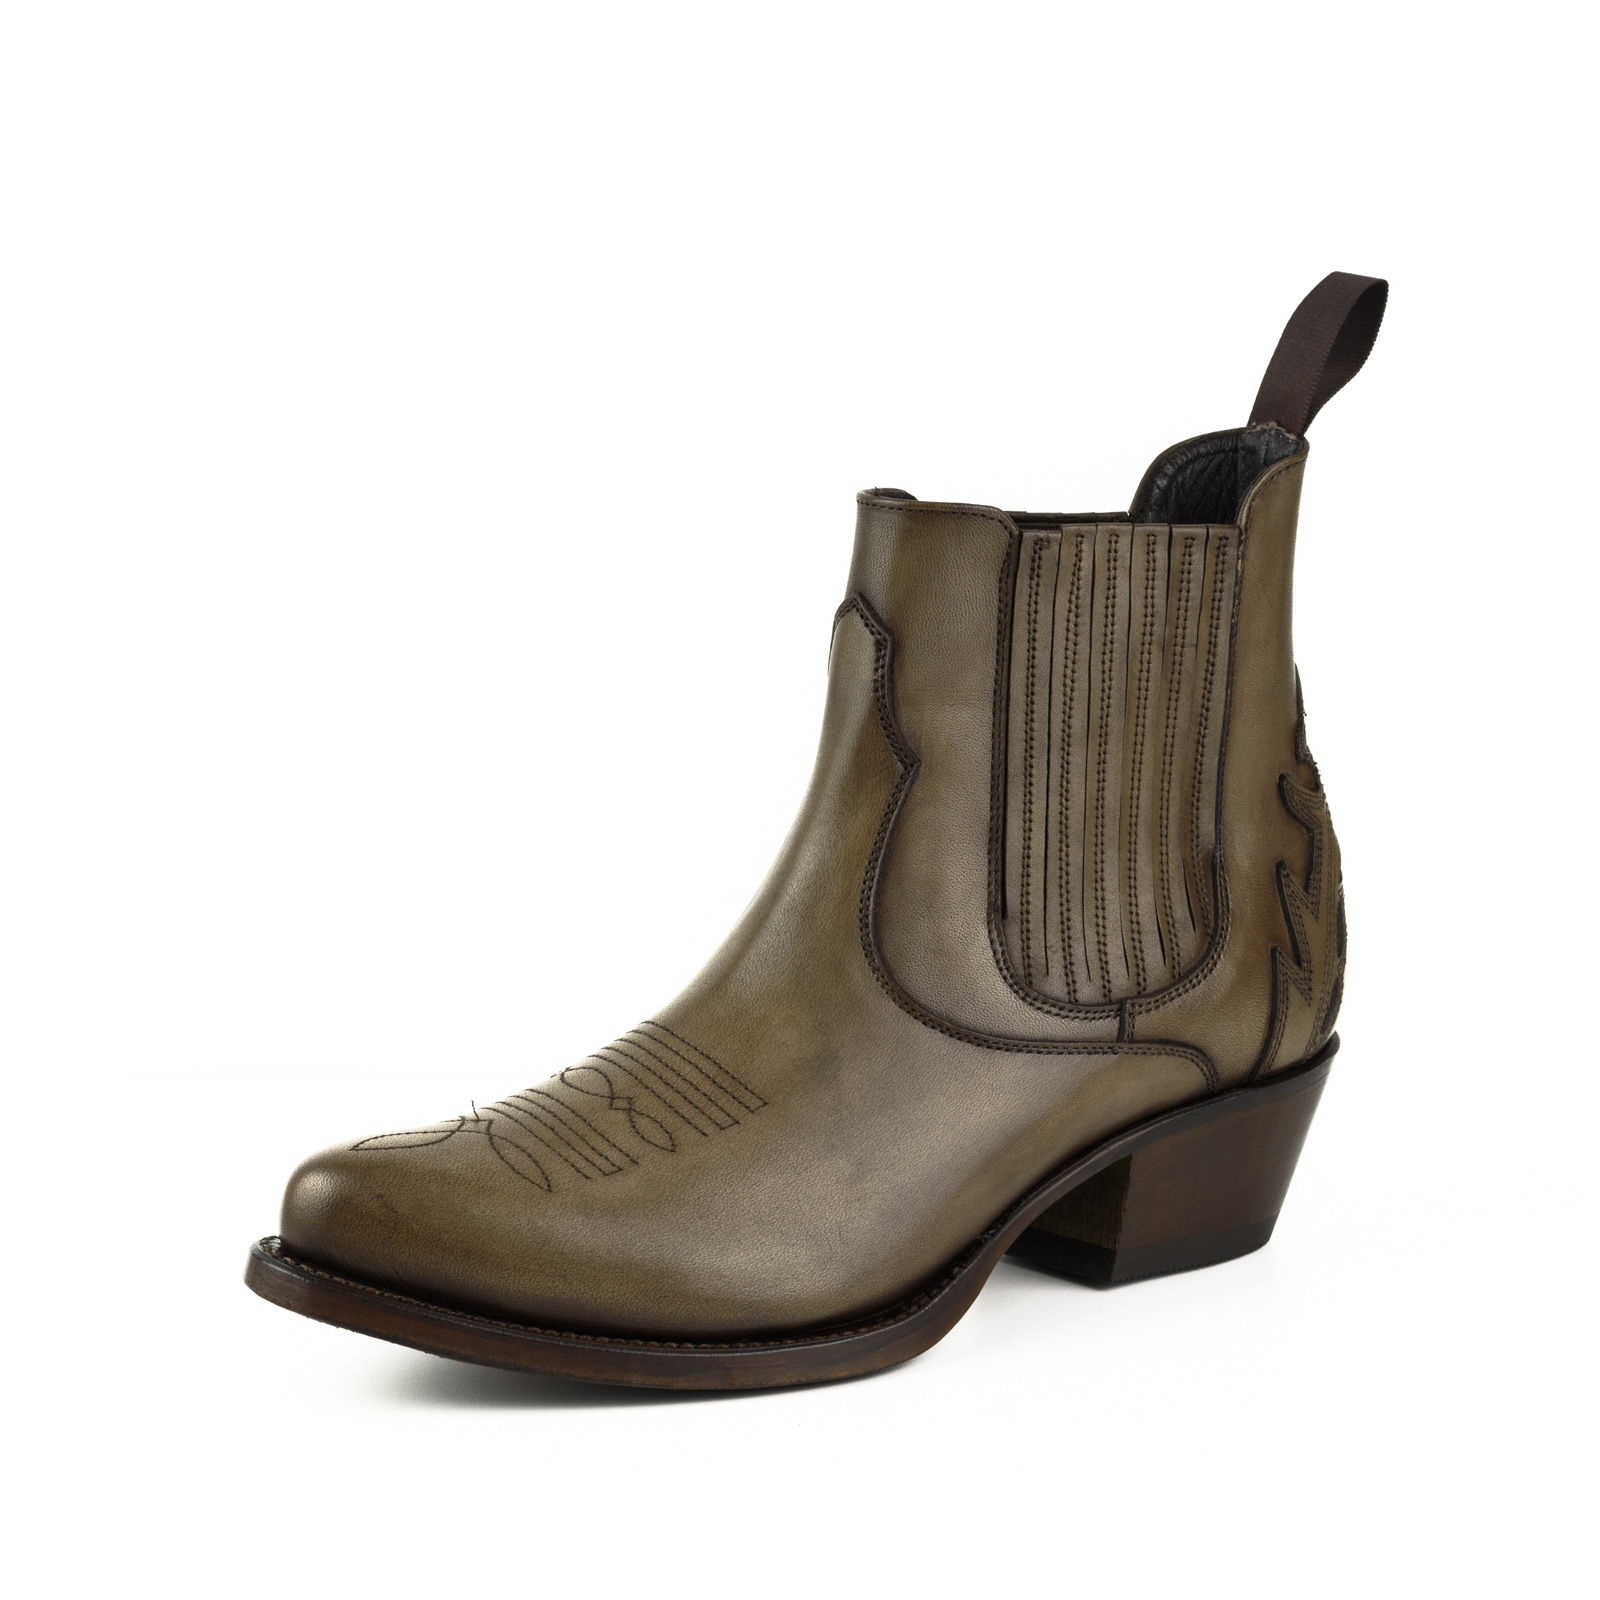 mayura-boots-modelo-marilyn-2487-taupe-1